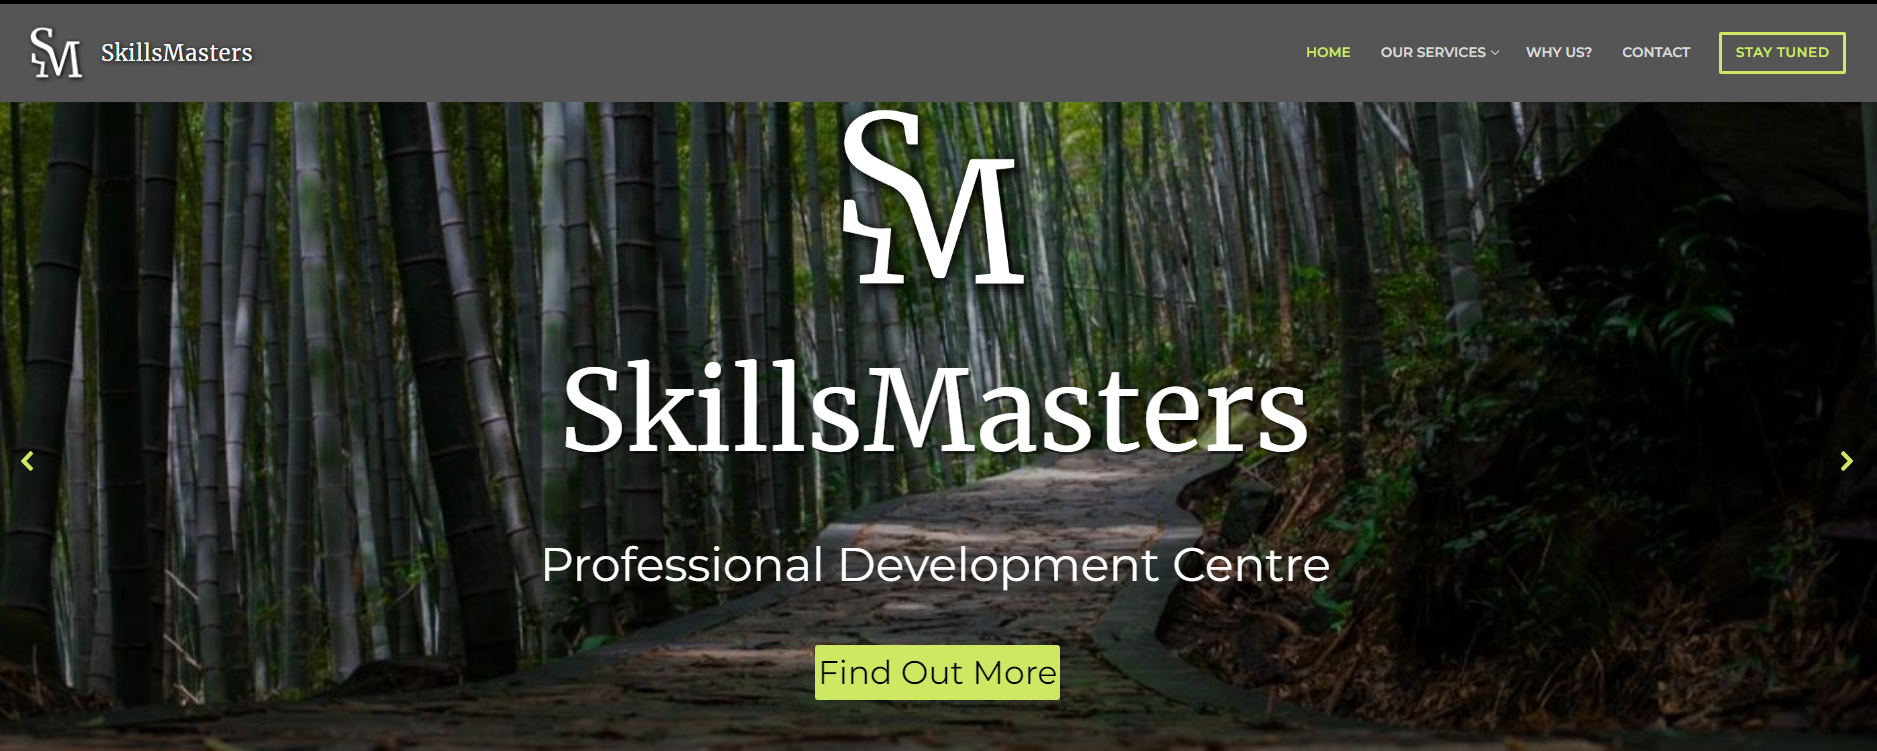 SkillsMaster Domina tus Habilidades